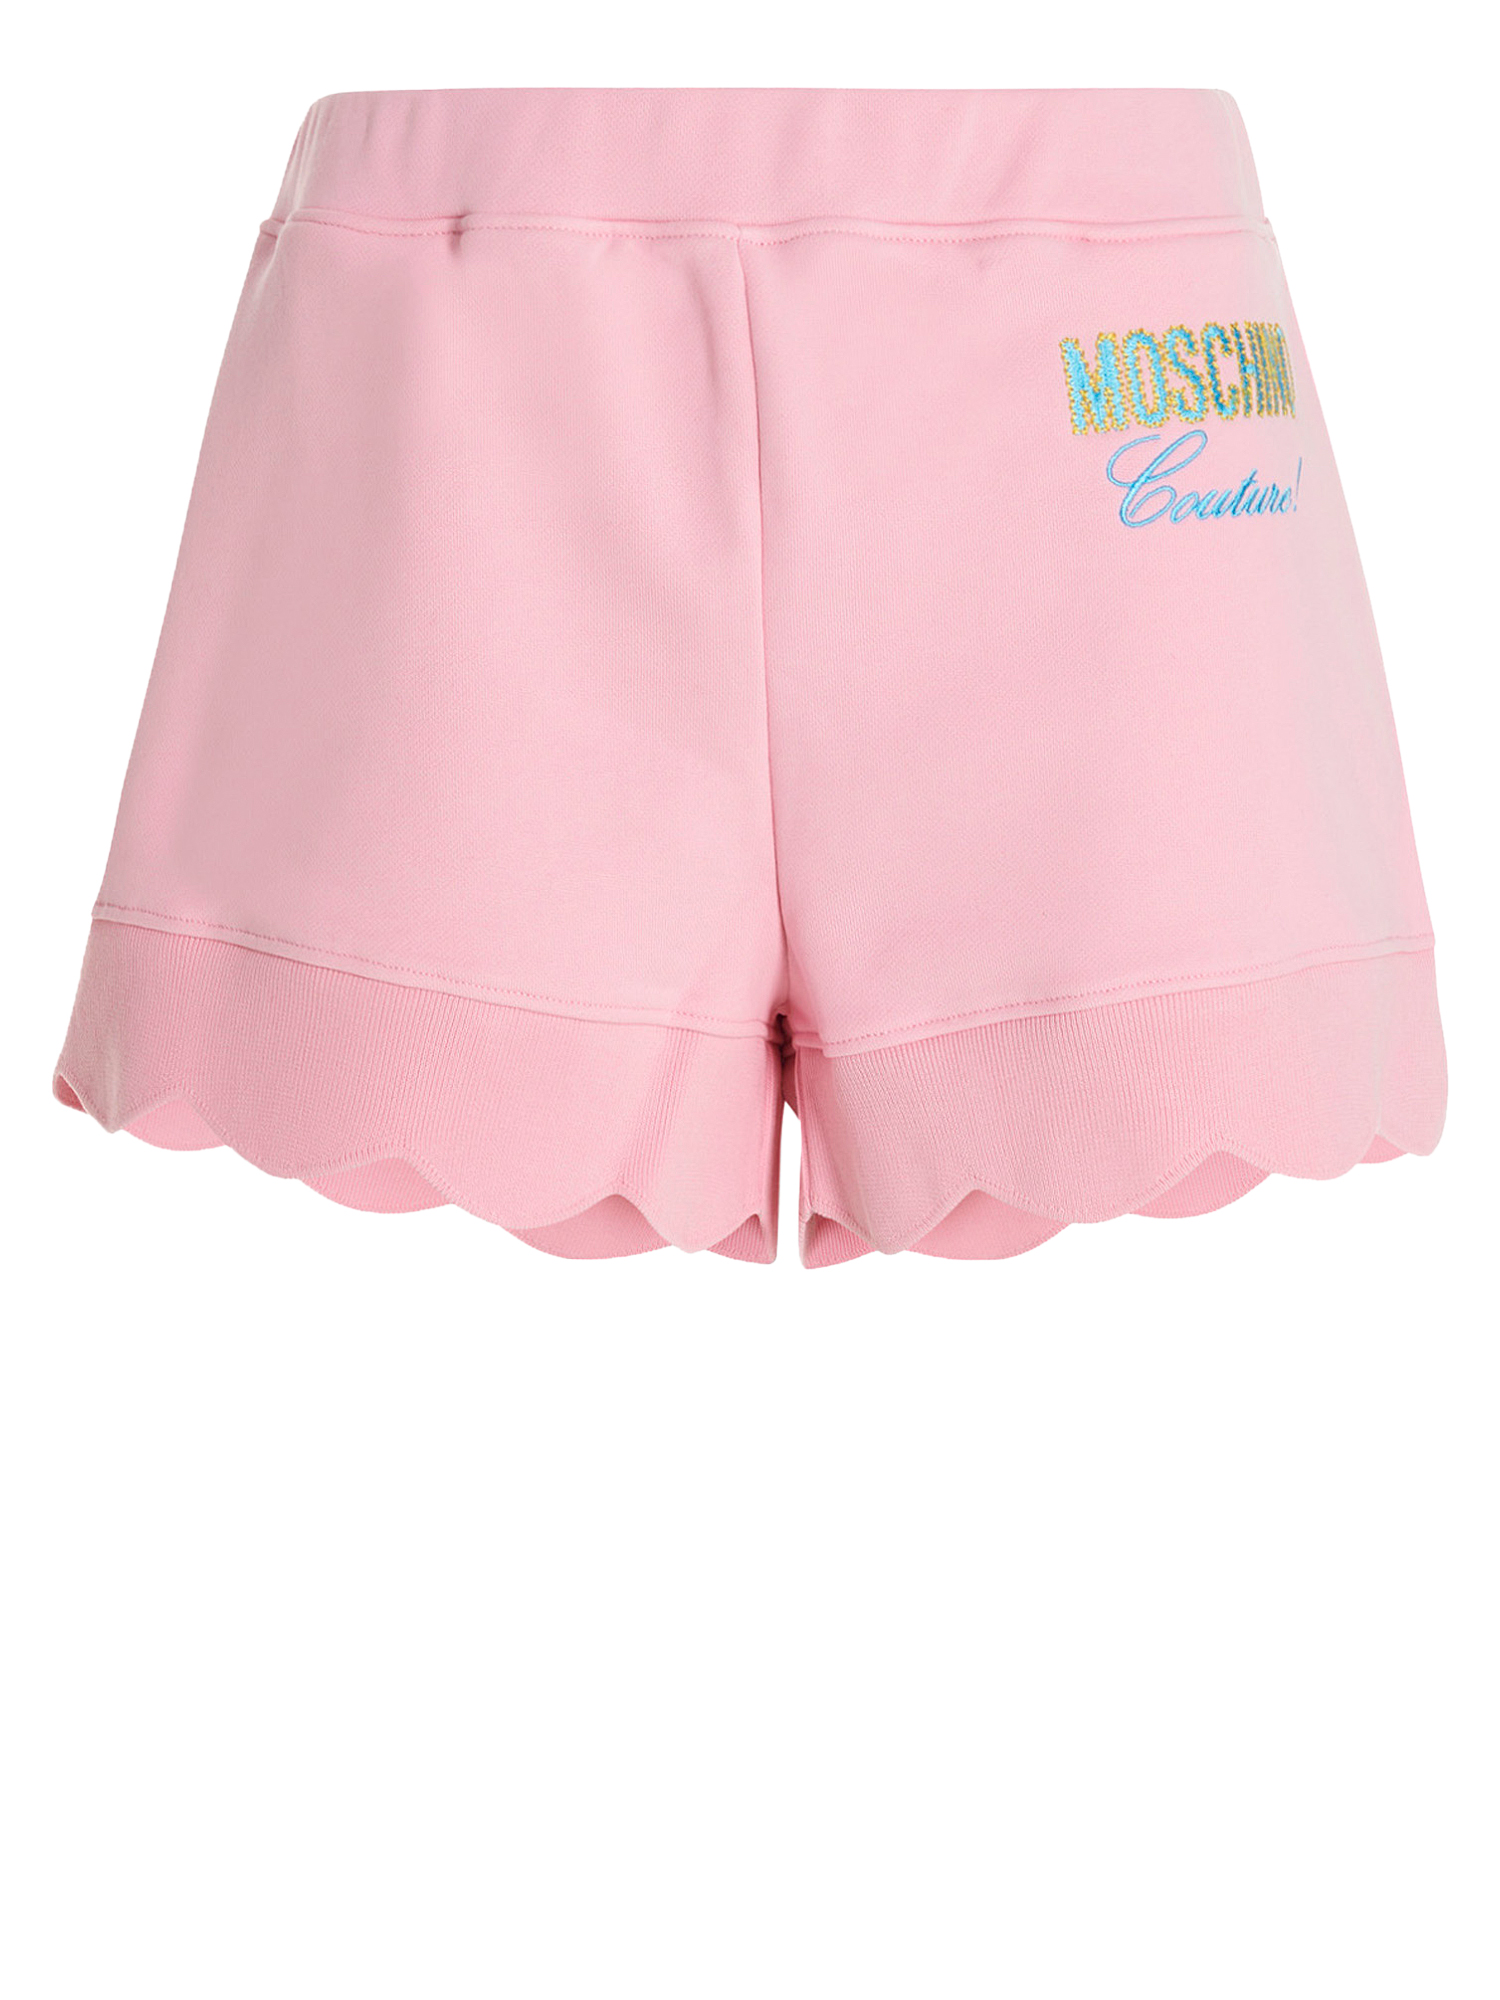 Pantalons Pour Femme - Moschino - En Cotton Pink - Taille:  -